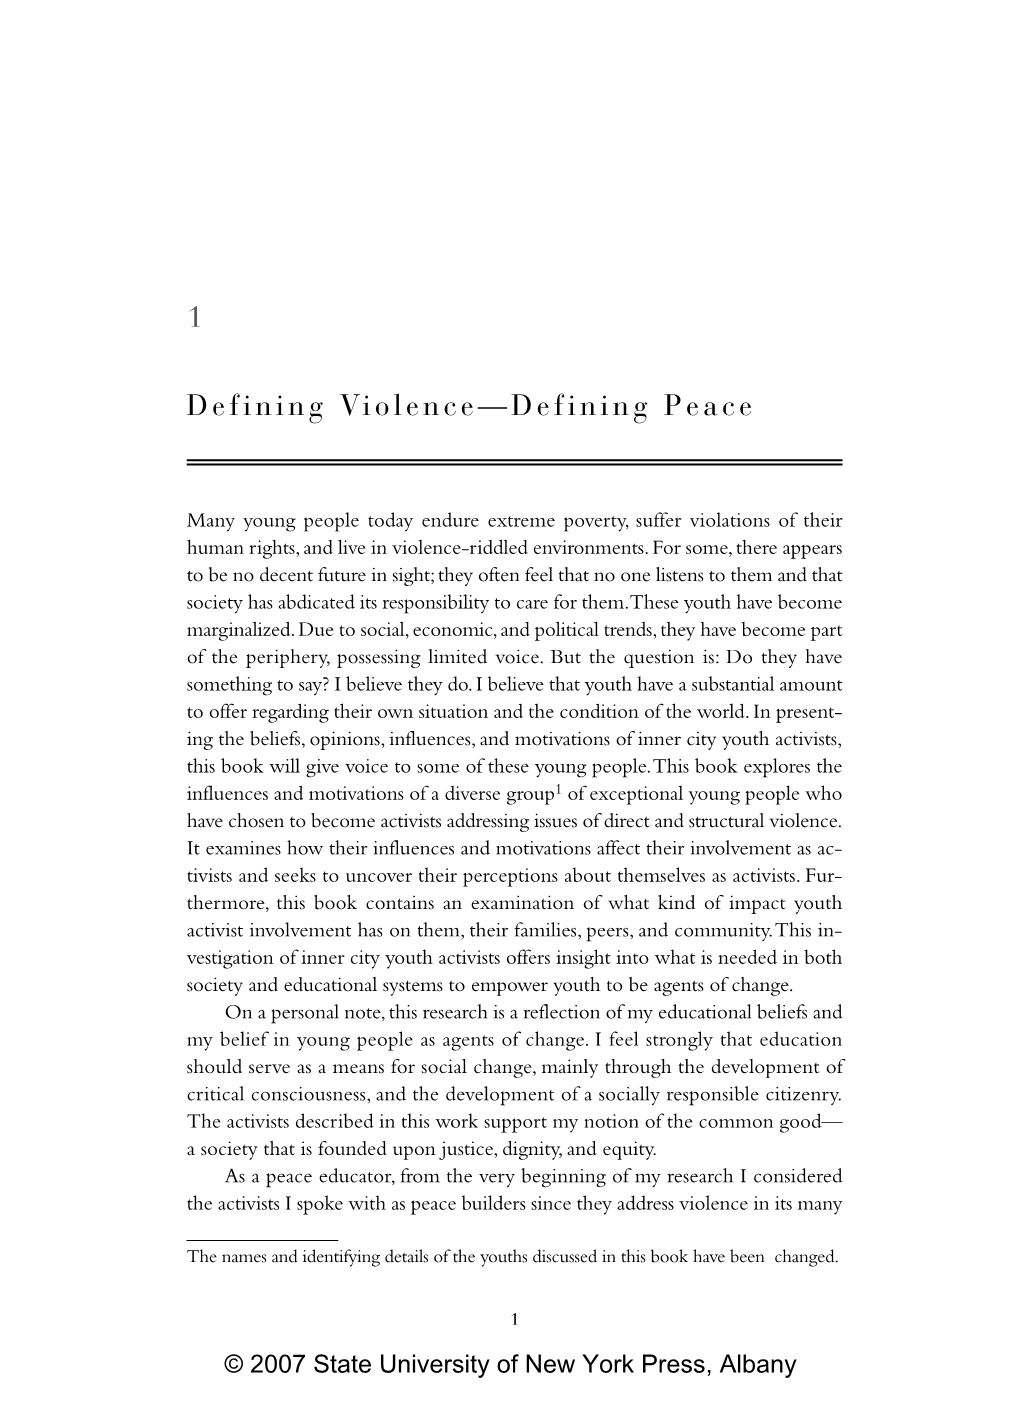 1 Defining Violence—Defining Peace